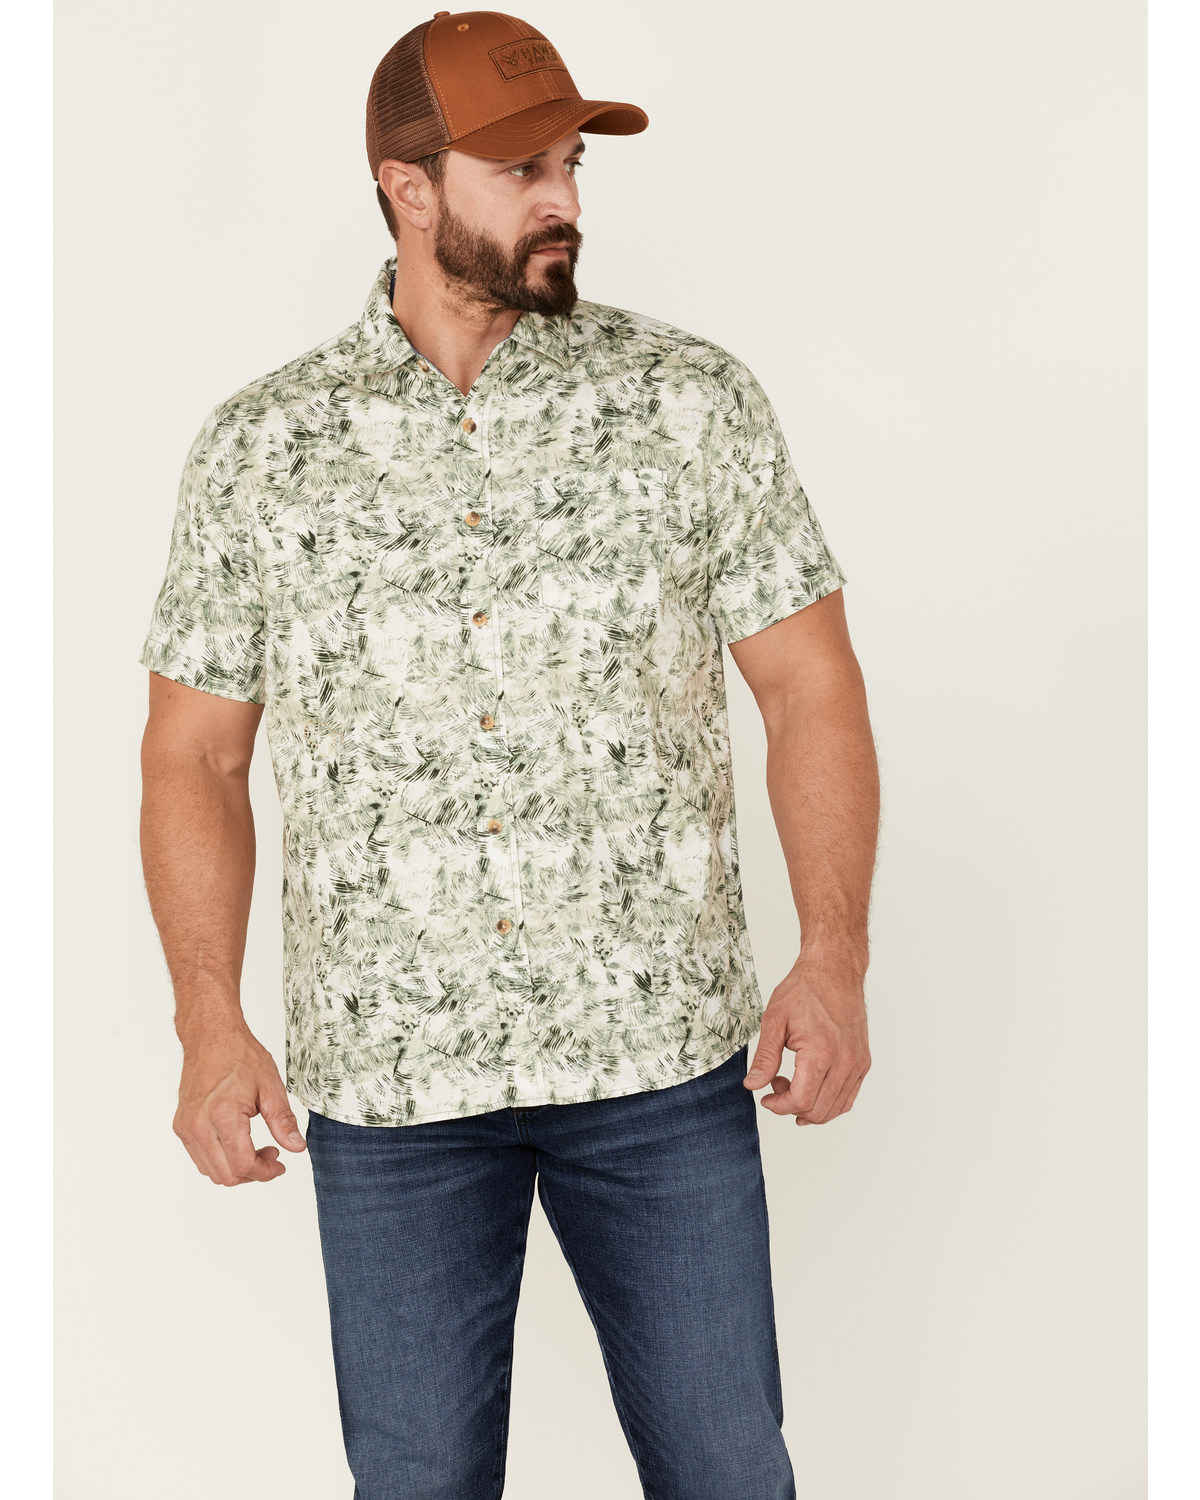 North River Men's Floral Print Short Sleeve Button Down Western Shirt